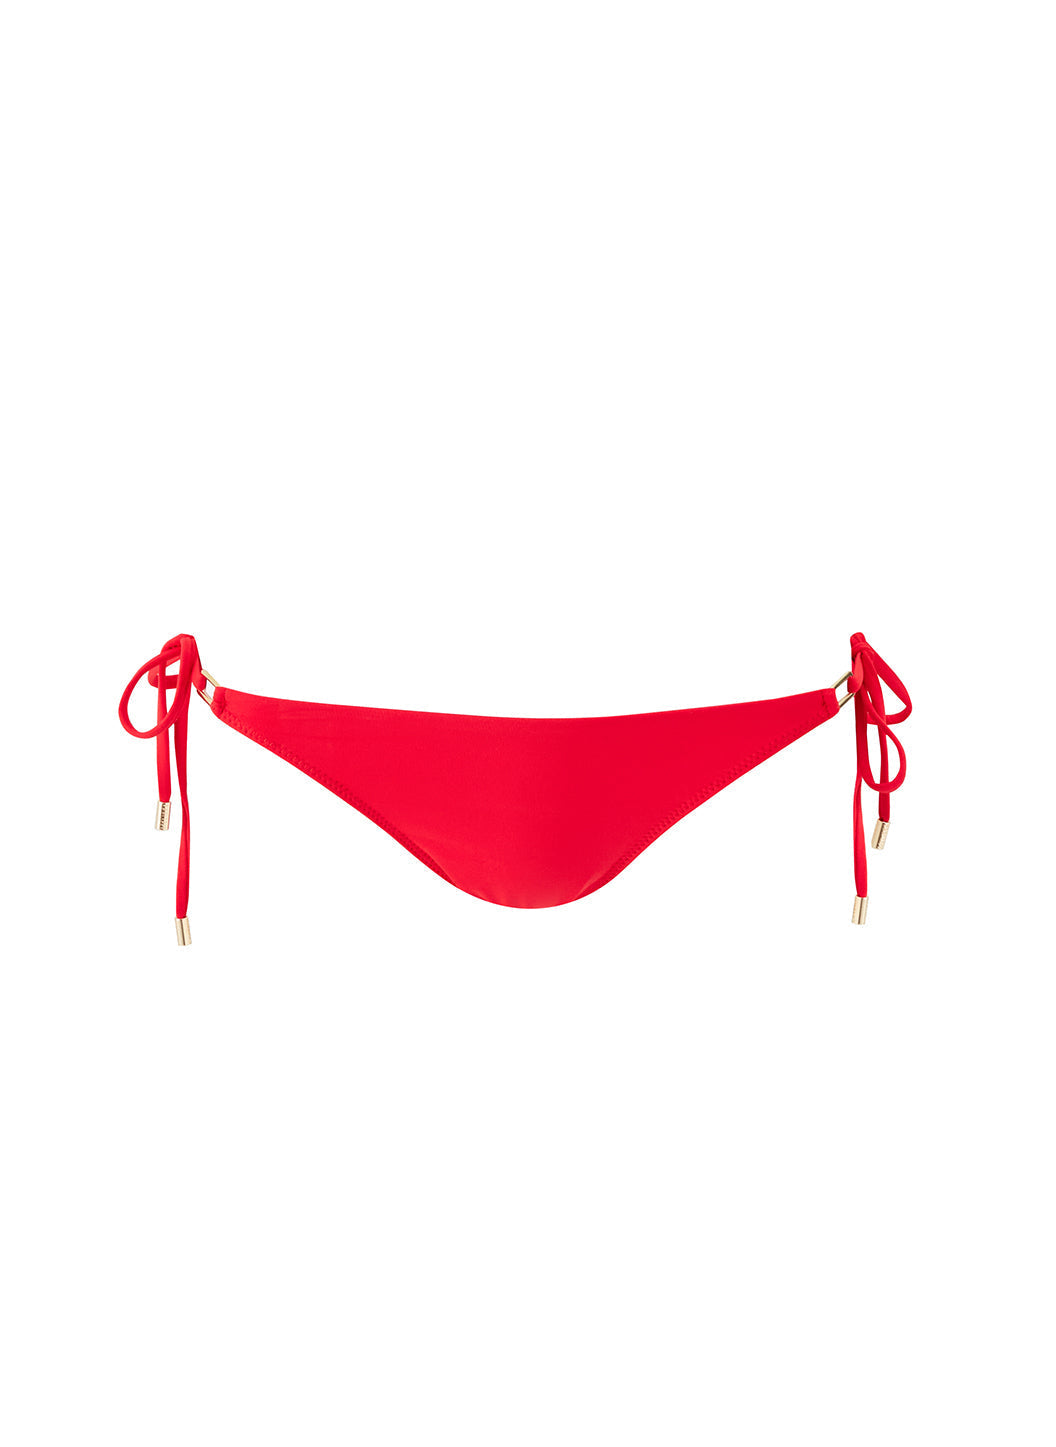 cancun-red-bikini-bottom_cutouts_2024